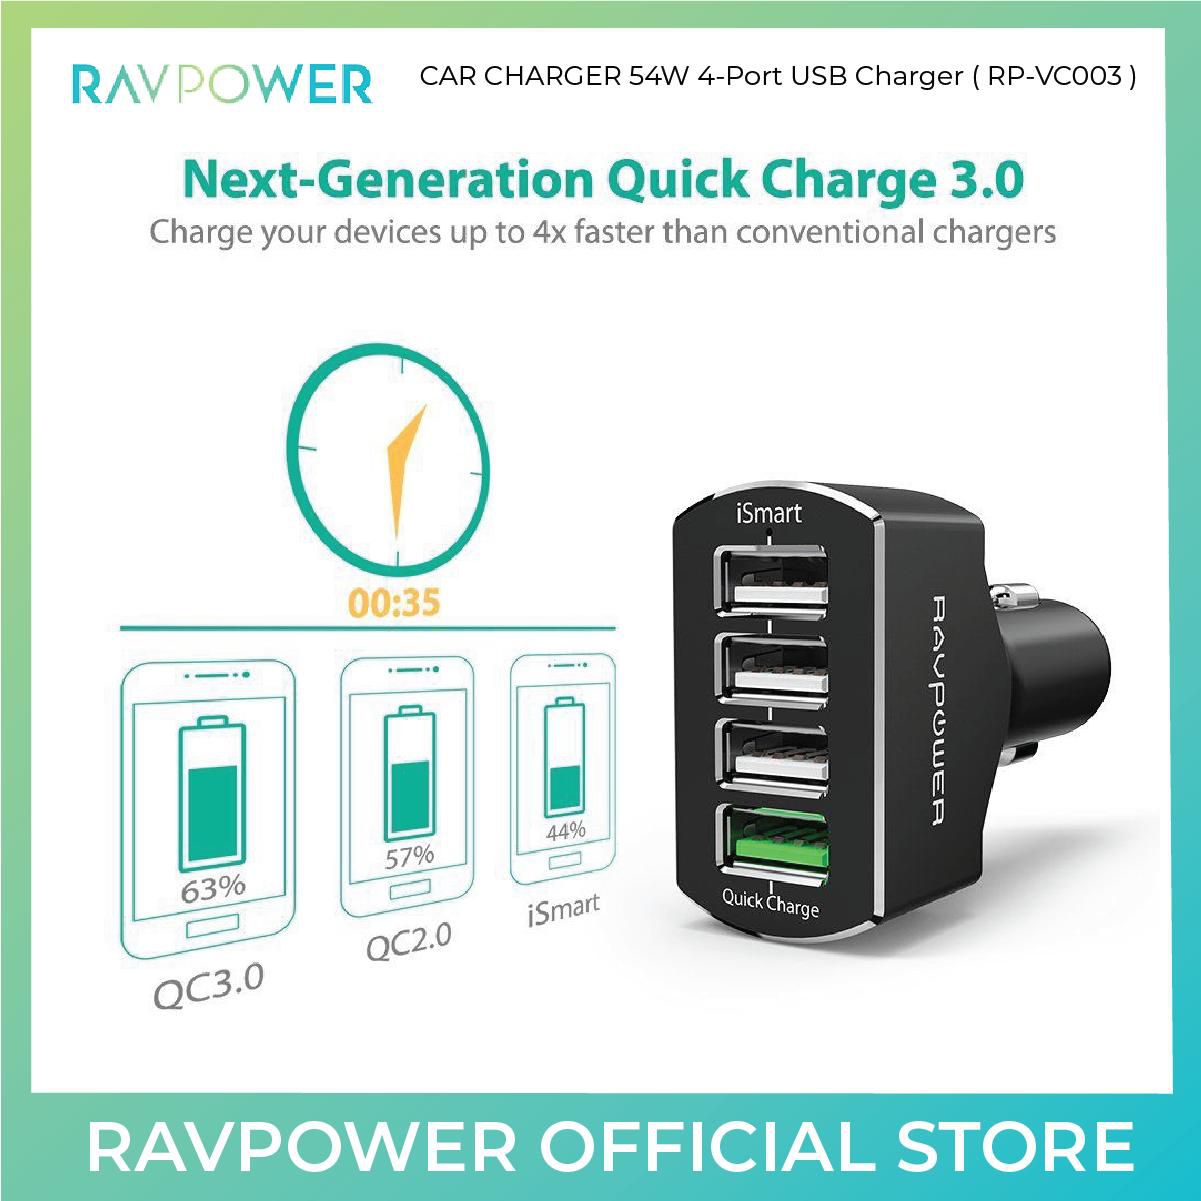 RAVPower 54W 4-Port USB Charger - RP-VC003 (Black)